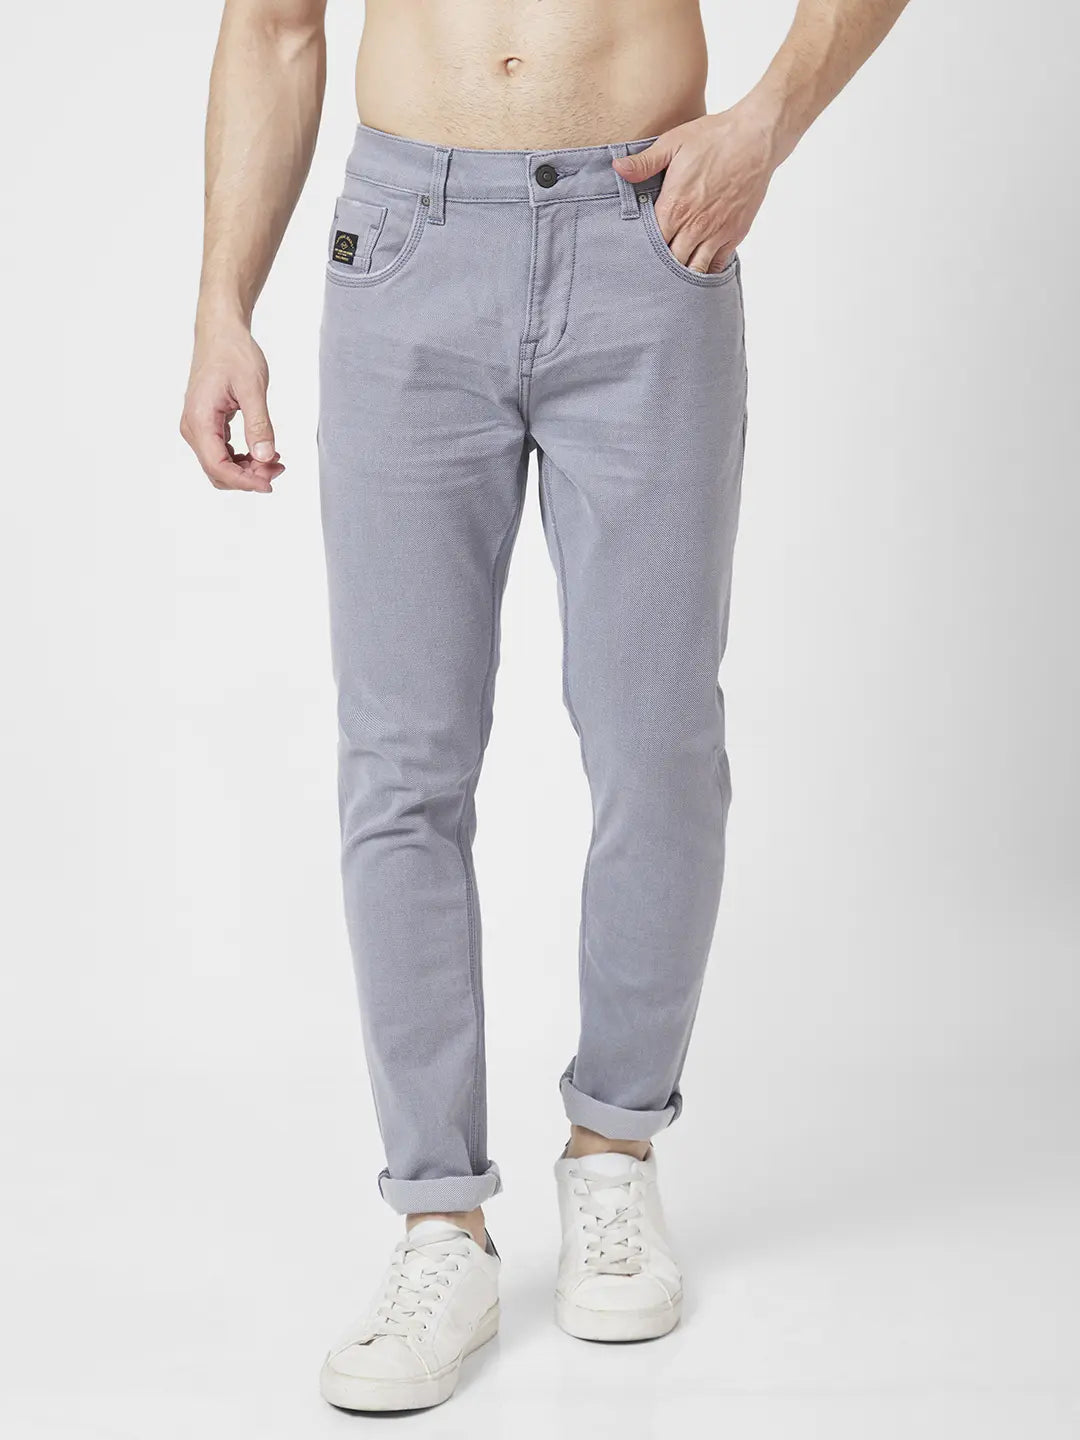 Spykar Men Grey Cotton Slim Fit Narrow Length Clean Look Low Rise Jeans (Skinny)